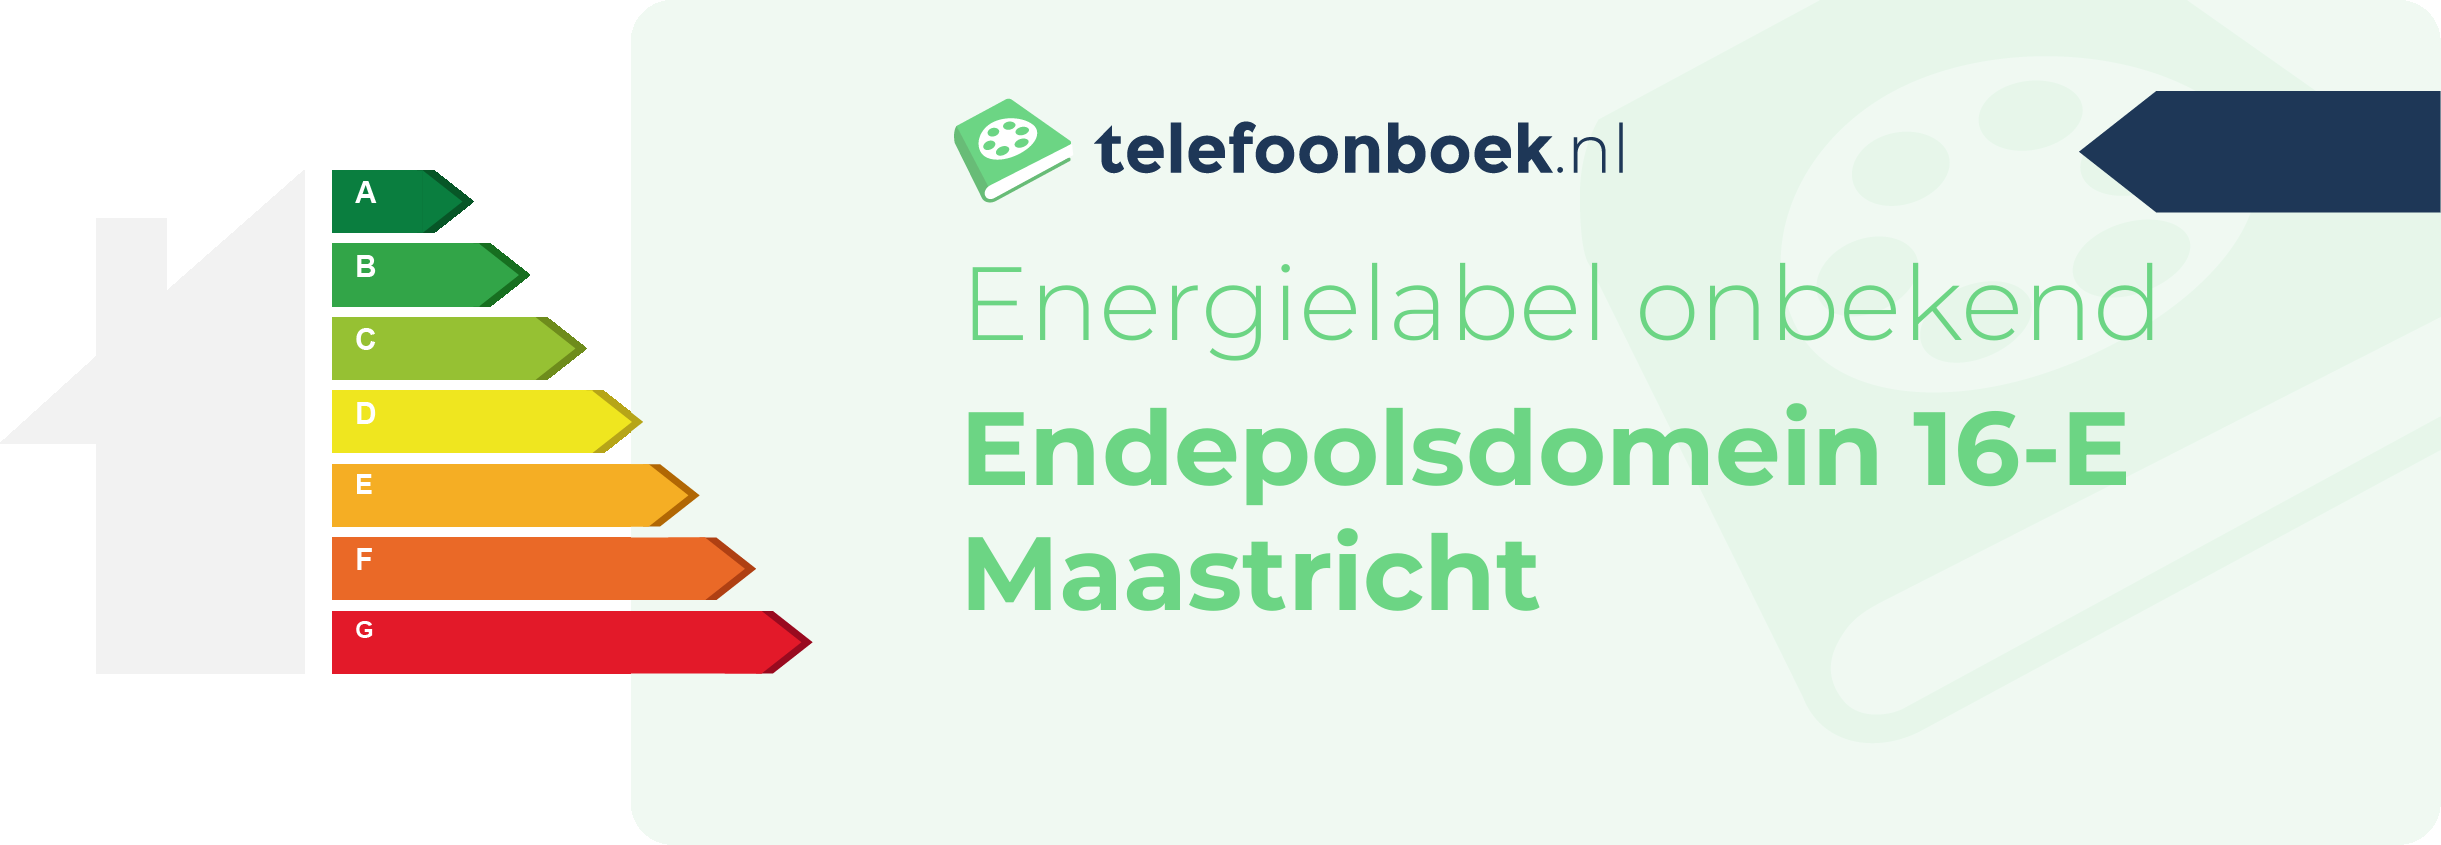 Energielabel Endepolsdomein 16-E Maastricht